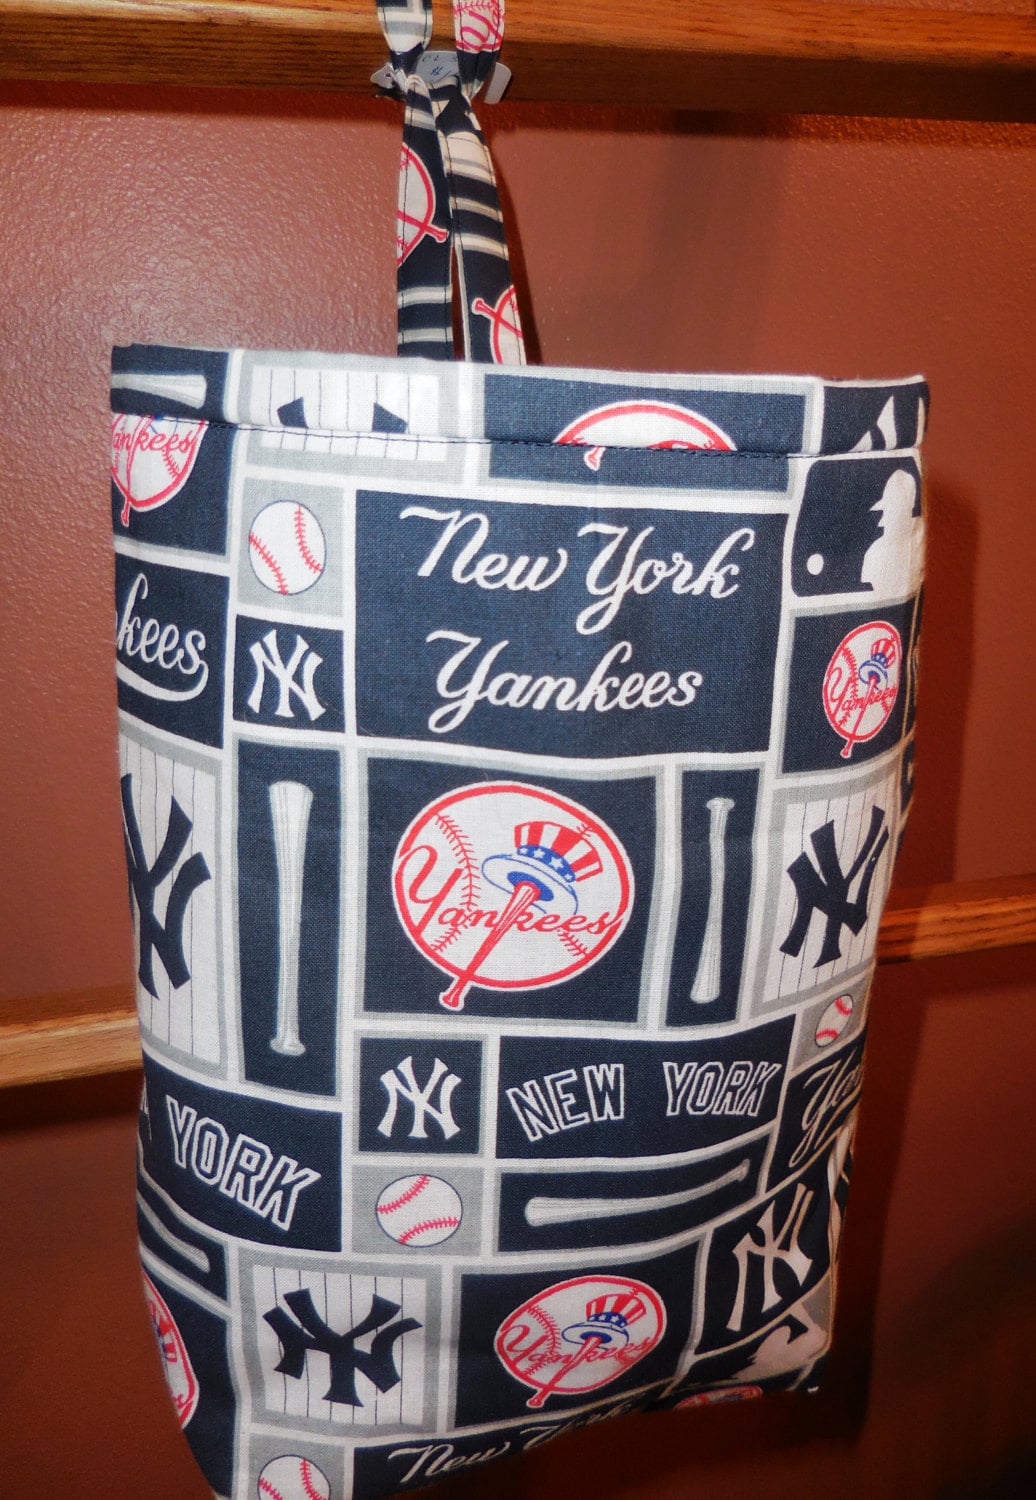 MLB Seamball New York Yankees Logo Hip Sack NY Waist Bag Pouch Bag [Ivory]